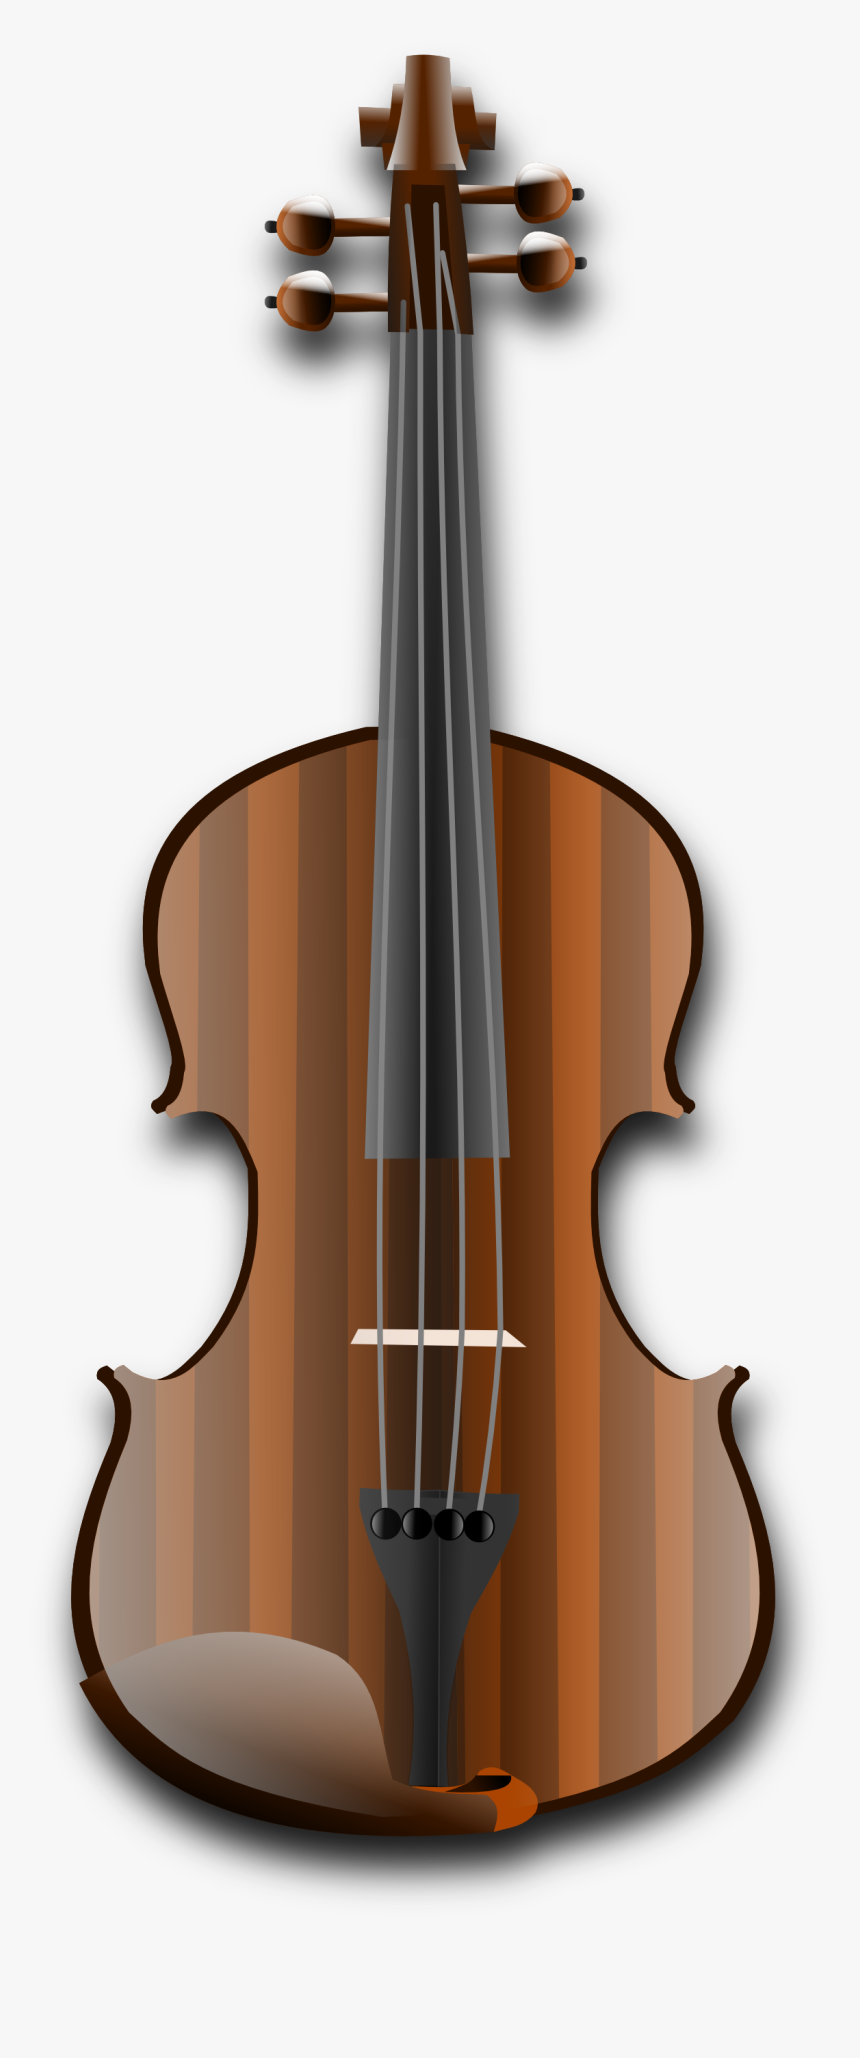 Playing Violin Clipart Images Guru - Public Domain Violin, HD Png Download, Free Download